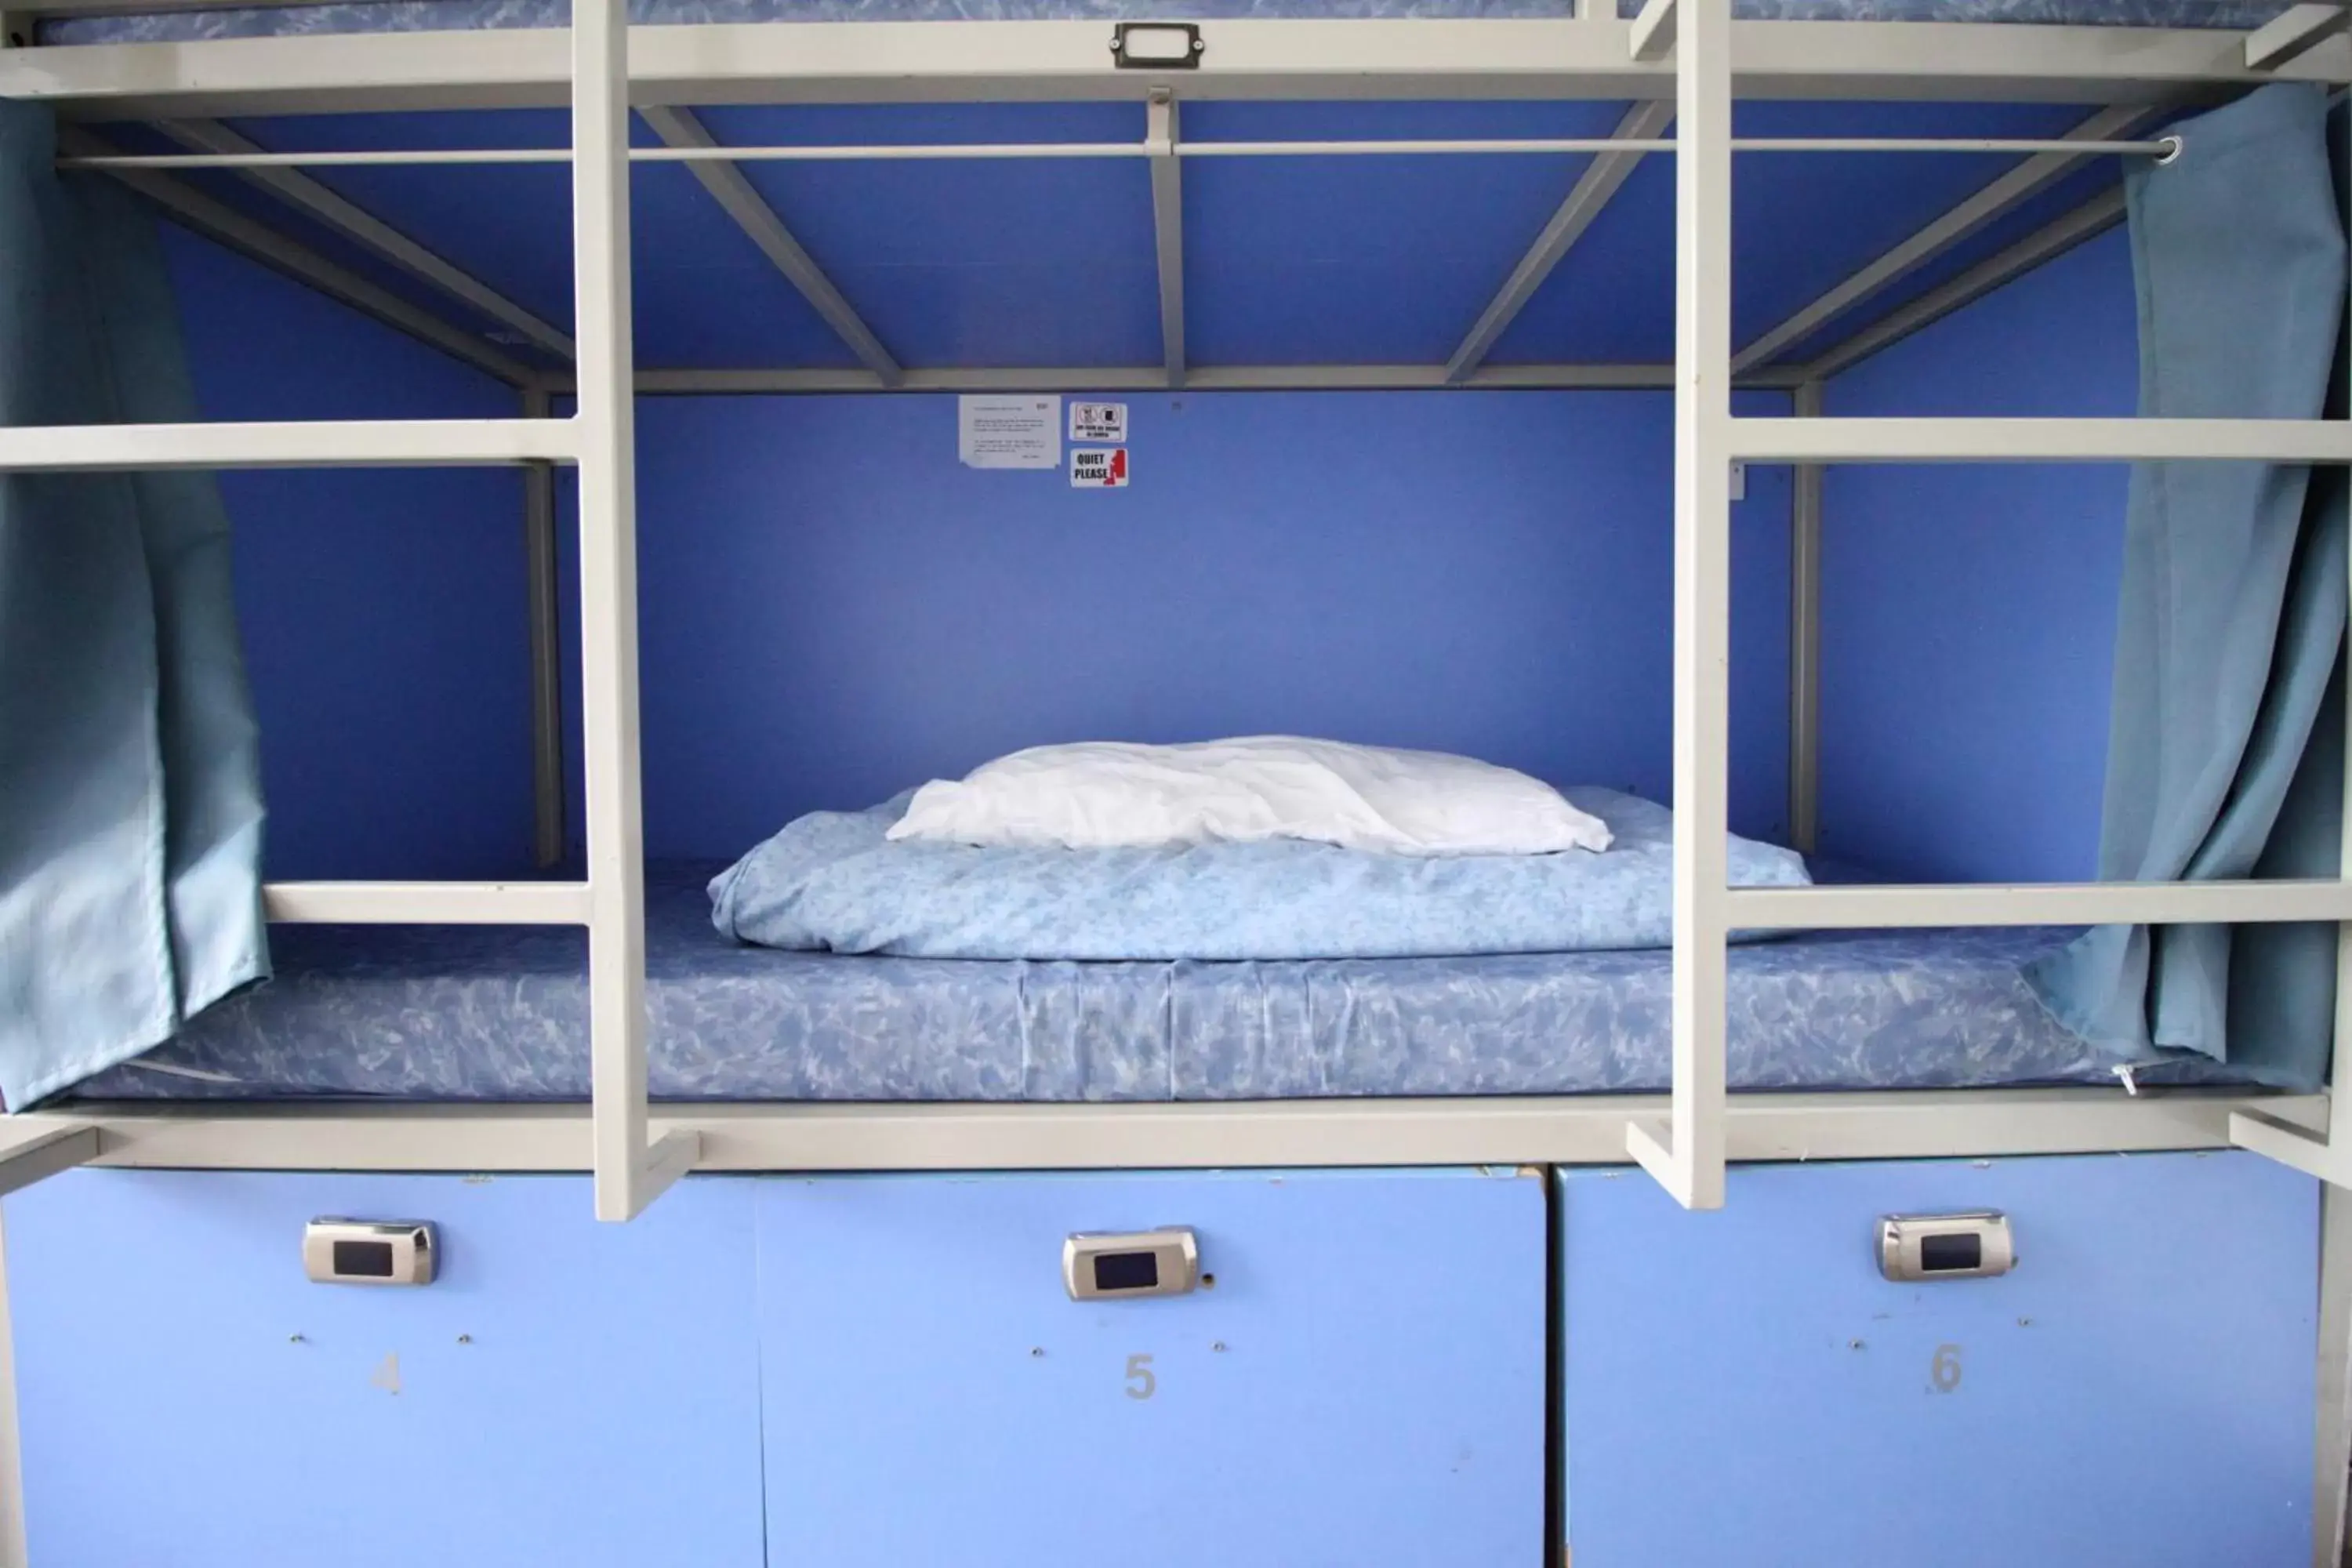 Bedroom, Bunk Bed in Smart Hyde Park Inn Hostel